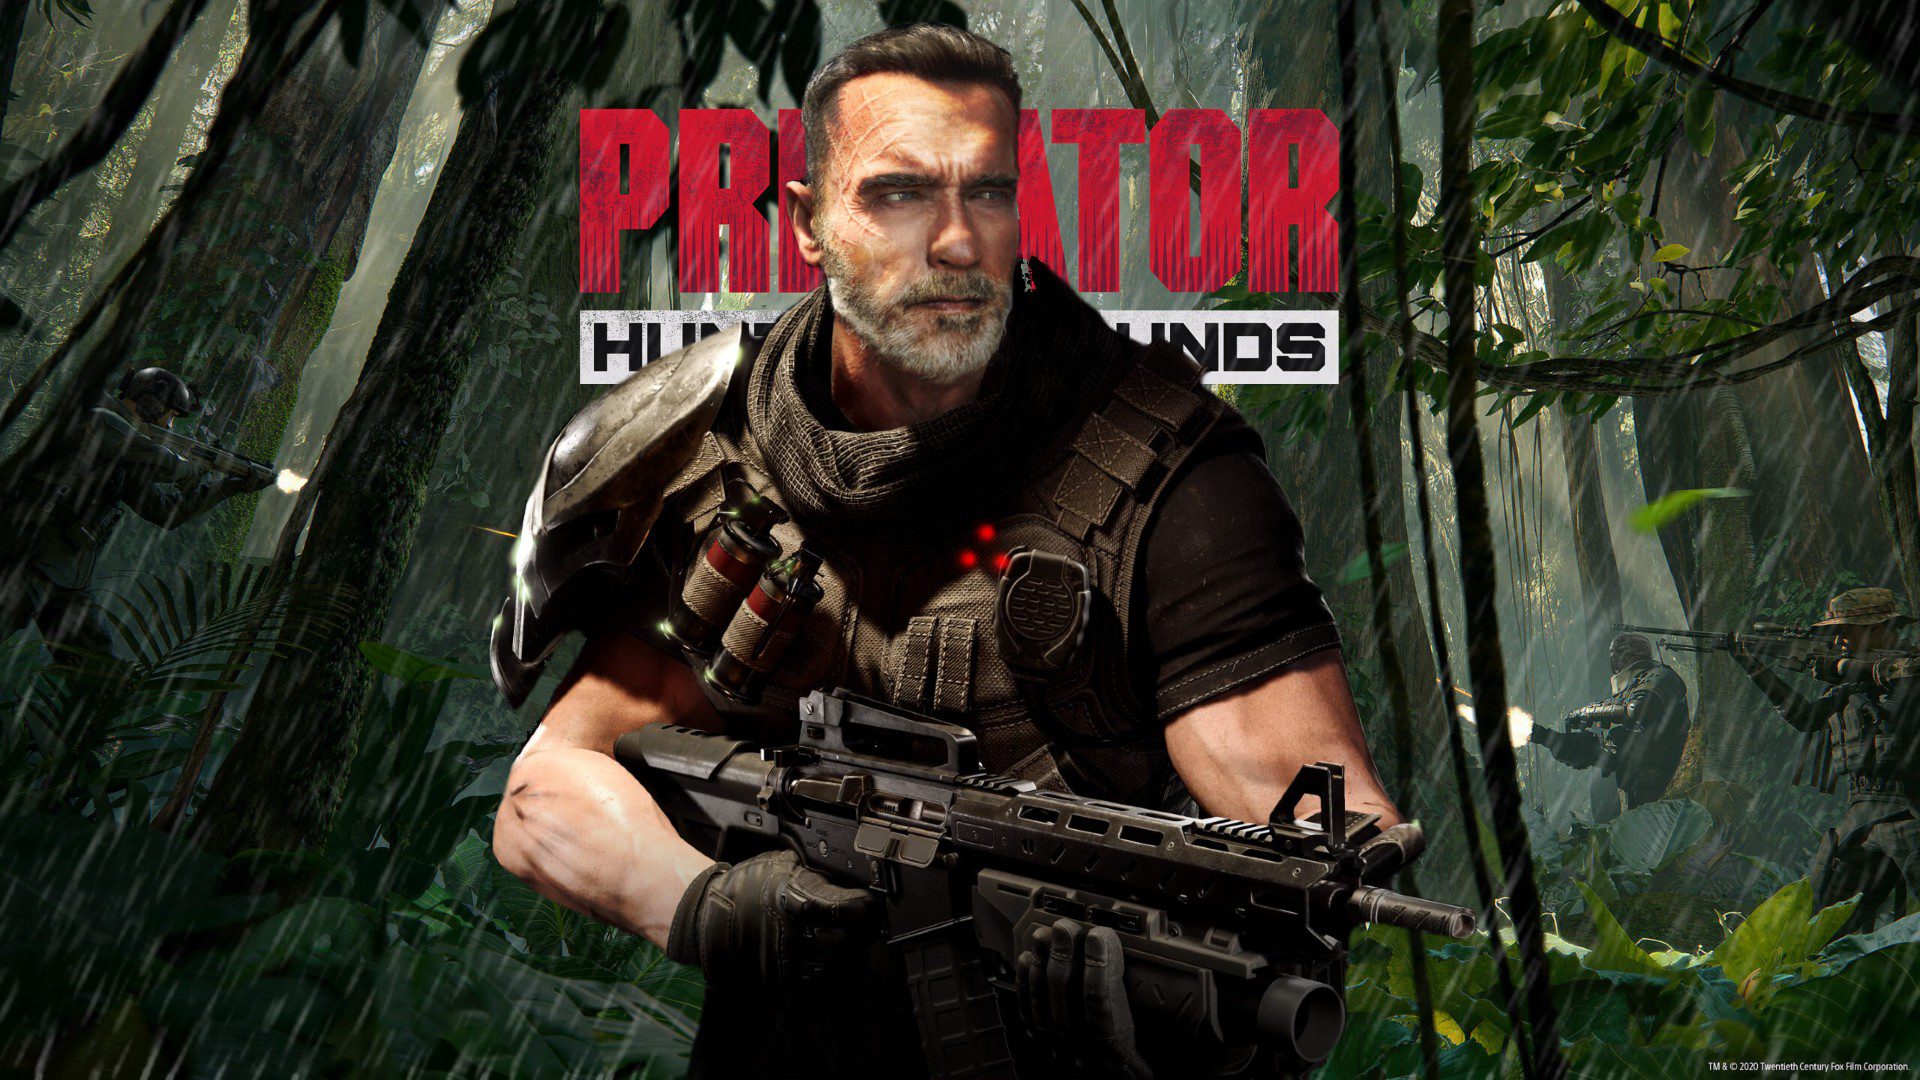 Arnold Schwarzenegger returns to Predator role in Predator: Hunting Grounds DLC